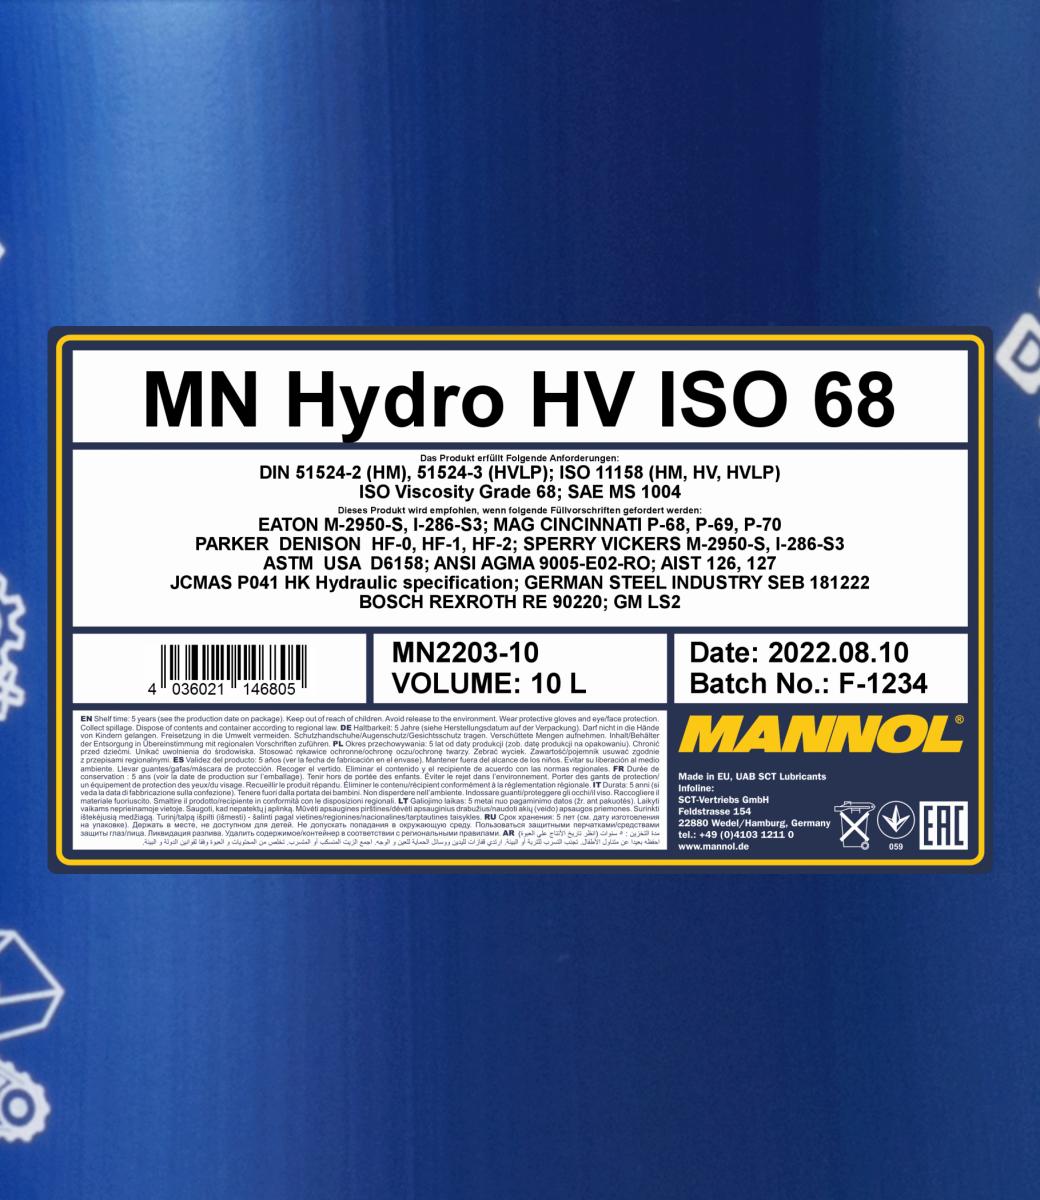 MN Hydro HV ISO 68 4036021146805 MN2203-10